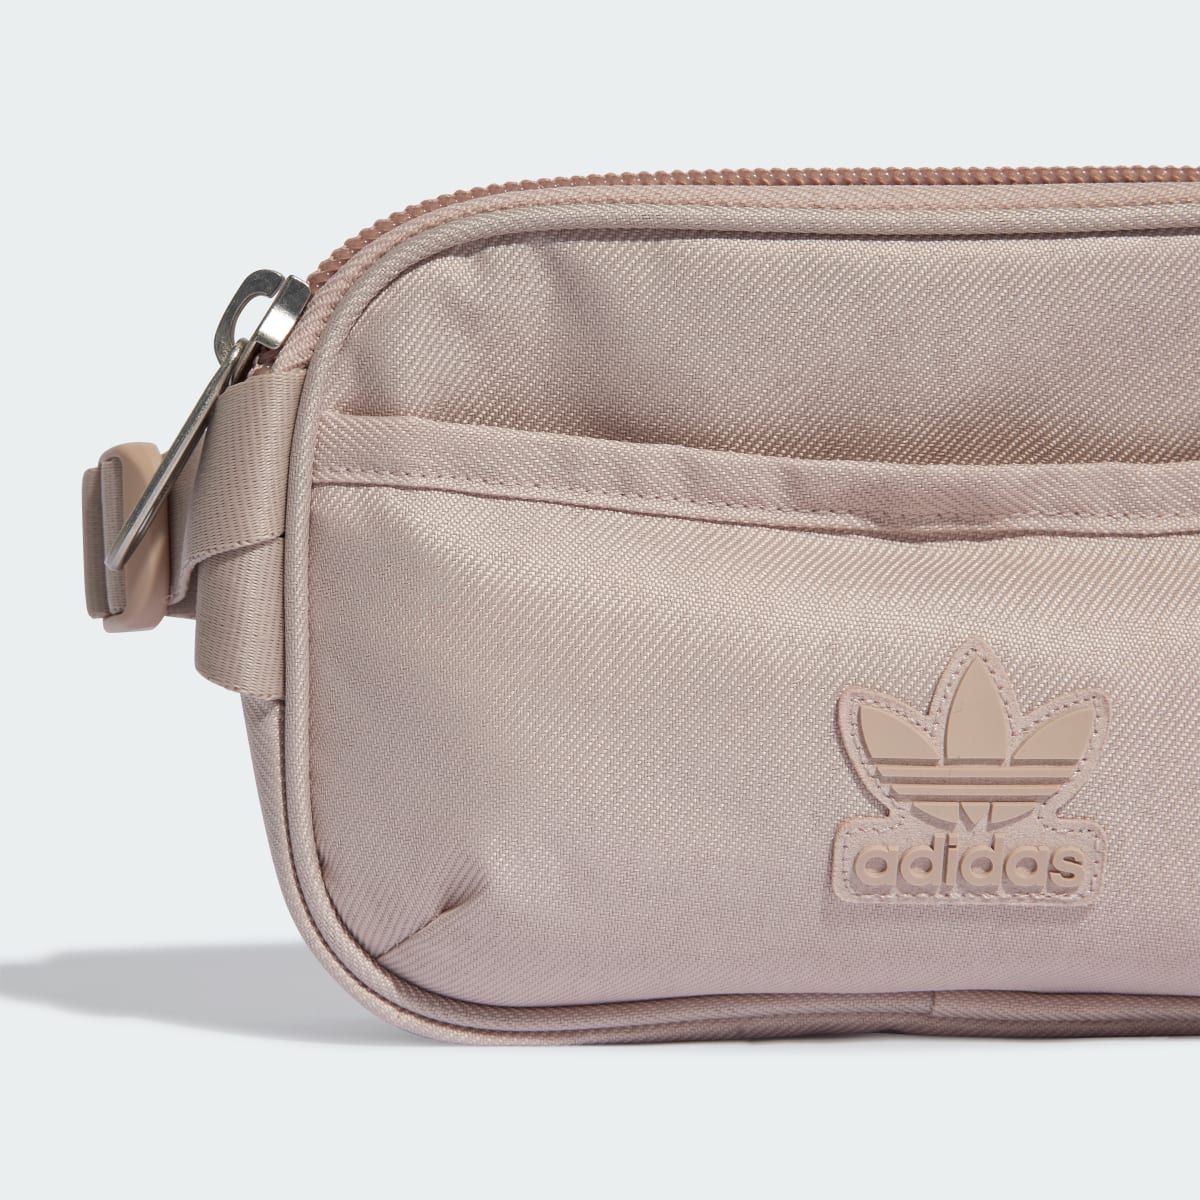 Adidas Sport Waist Bag. 5